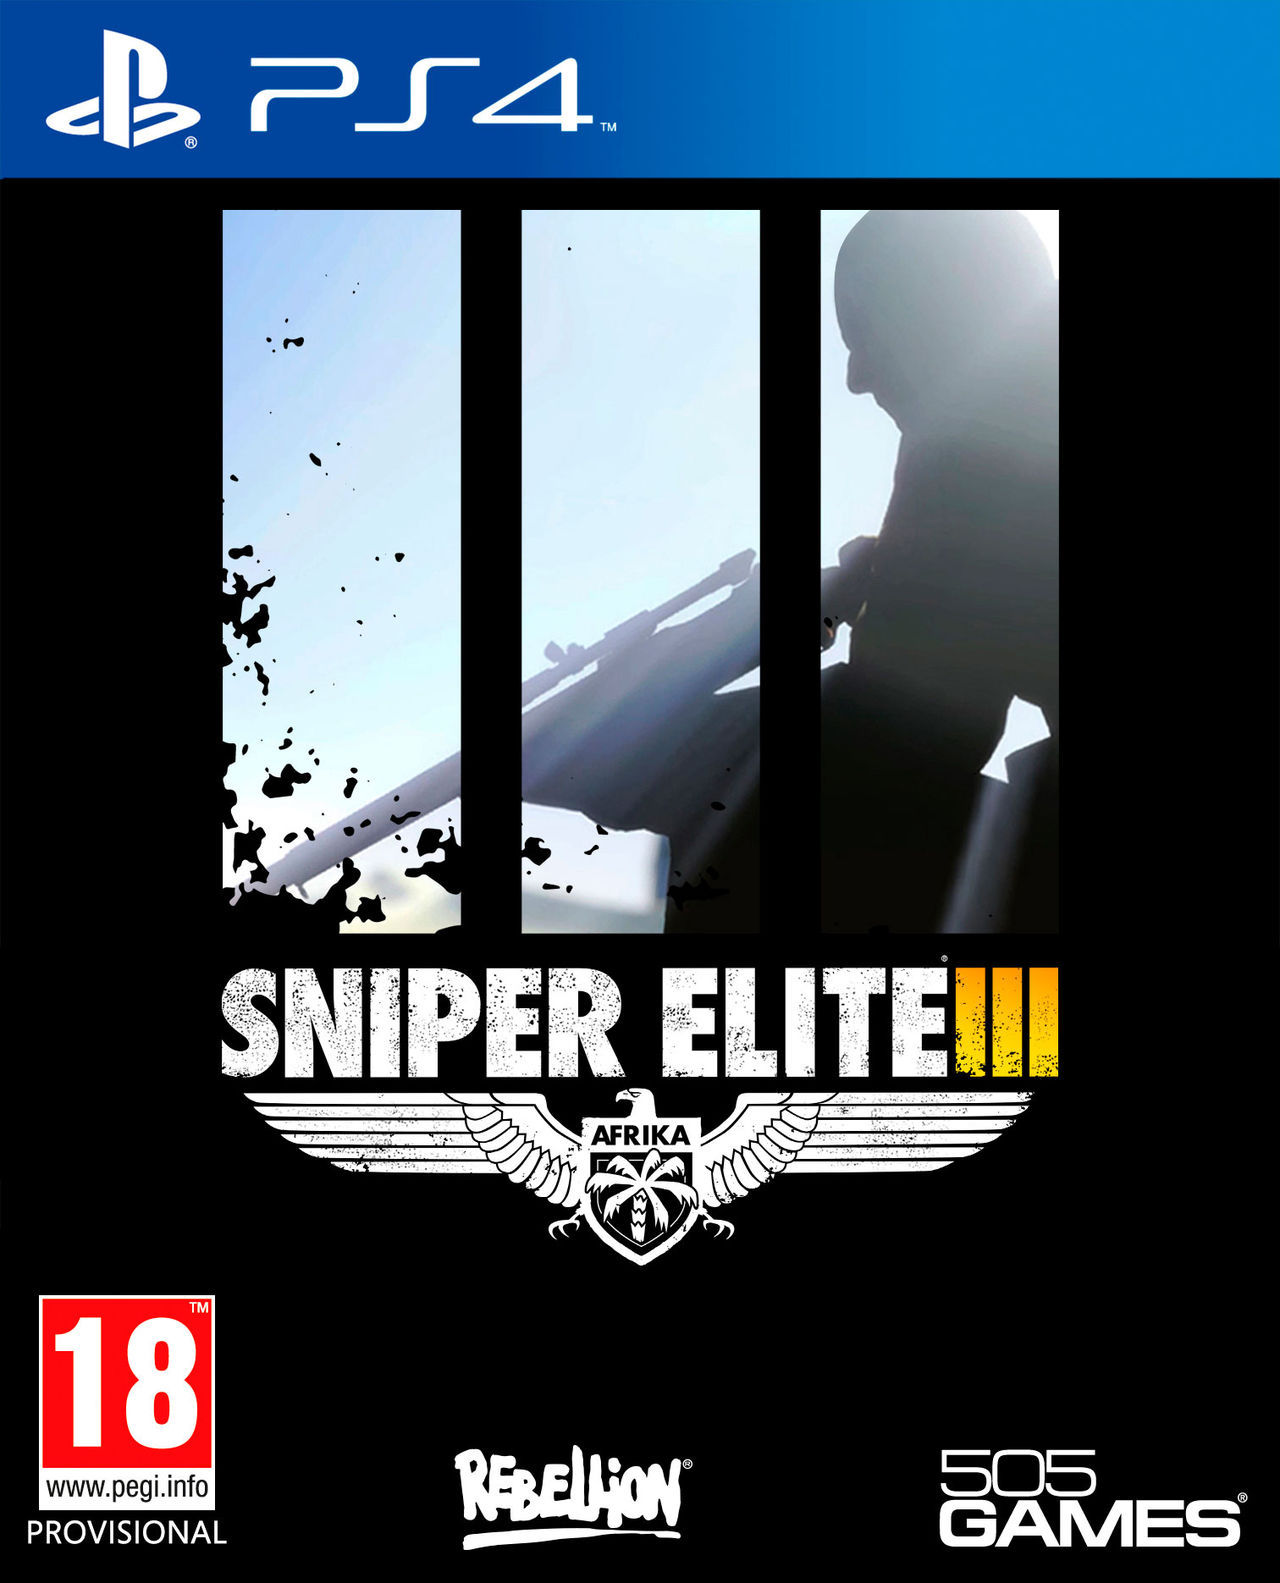 Ópera Adiós La forma Sniper Elite III - Videojuego (PS4, PC, Xbox 360, PS3 y Xbox One) - Vandal